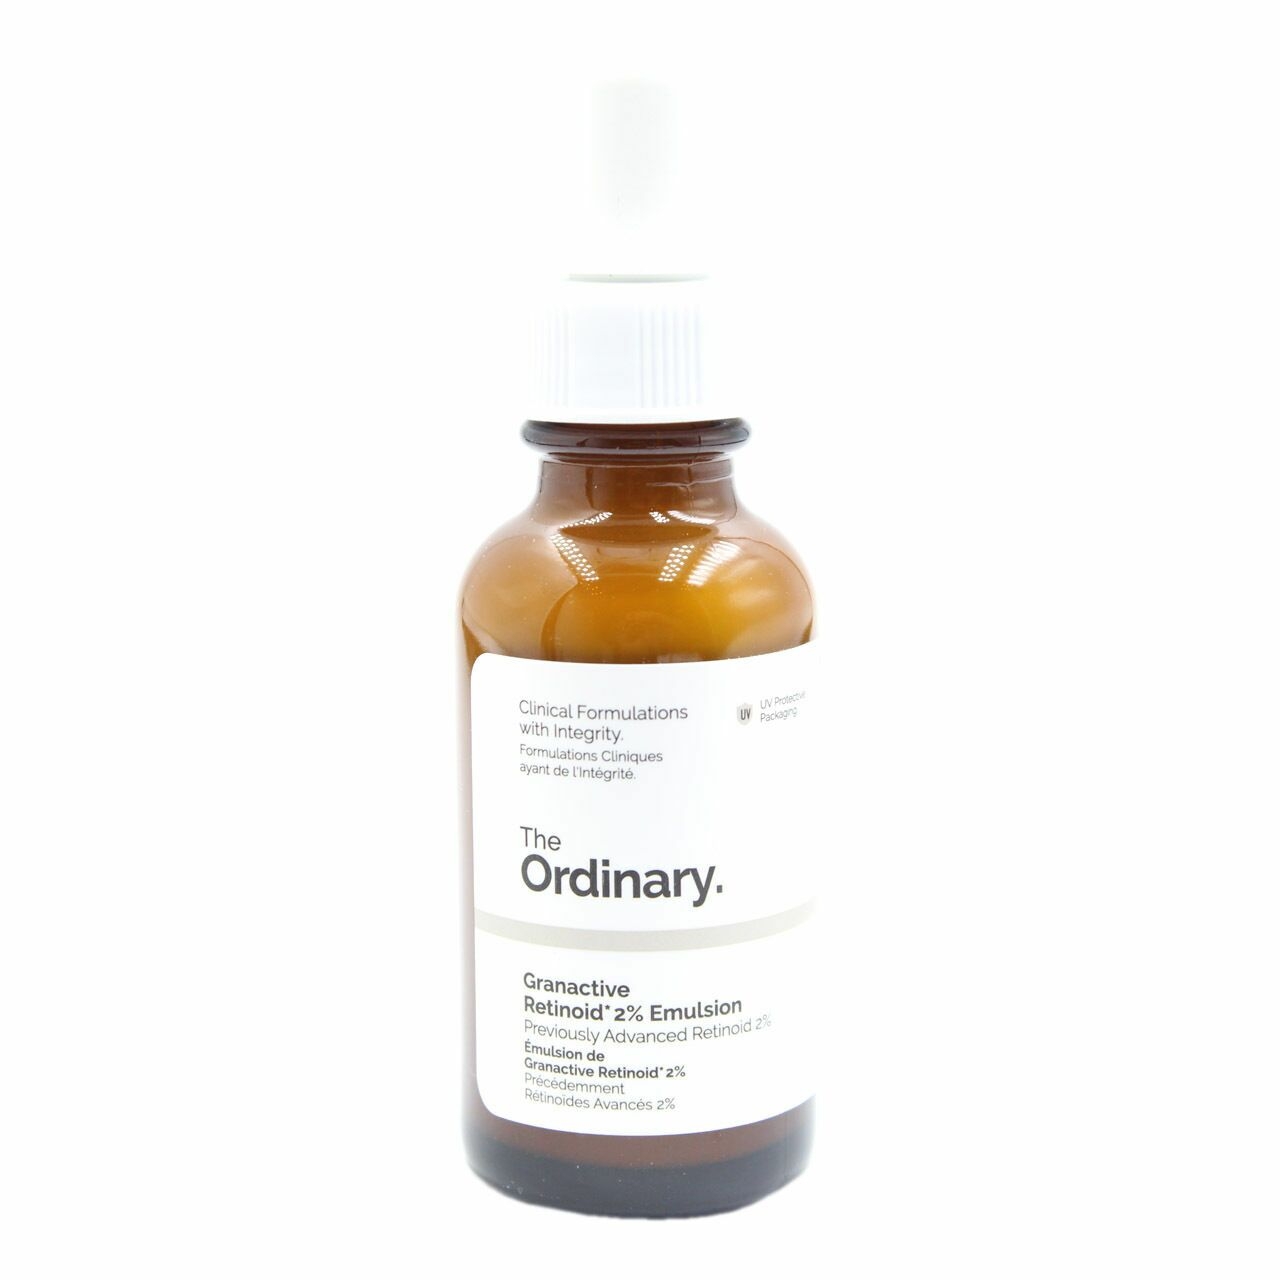 The Ordinary Granactive , Retinoid 2%, Emulsion Skin Care